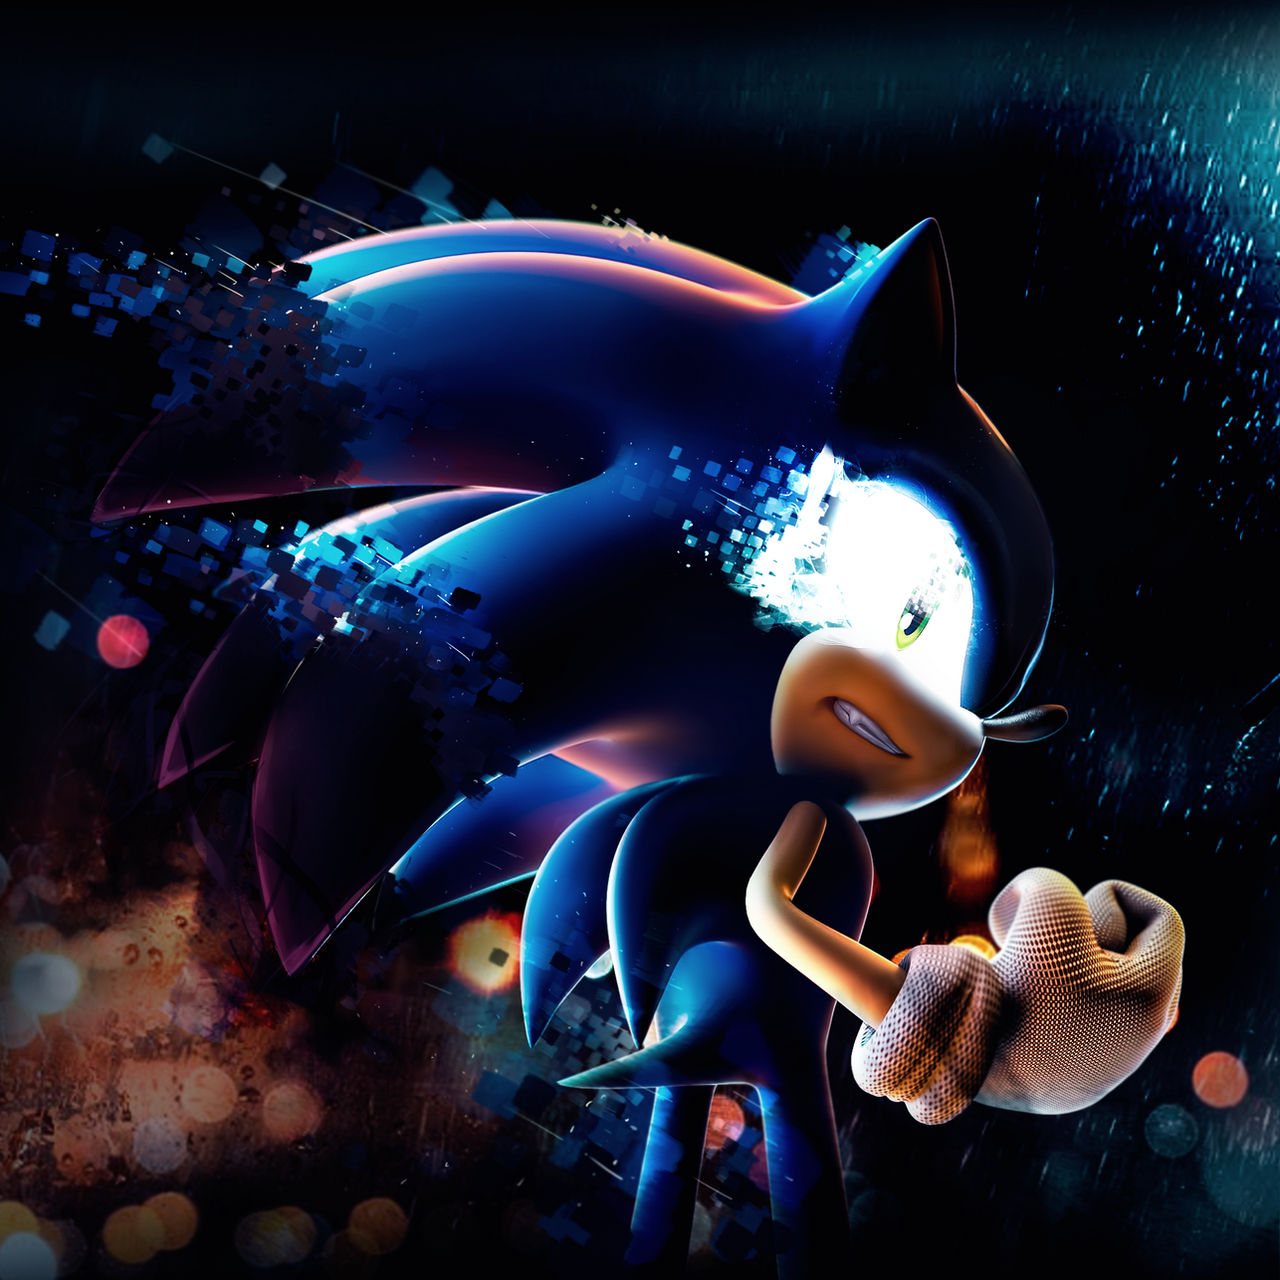 Shadow The Hedgehog by Fentonxd on DeviantArt